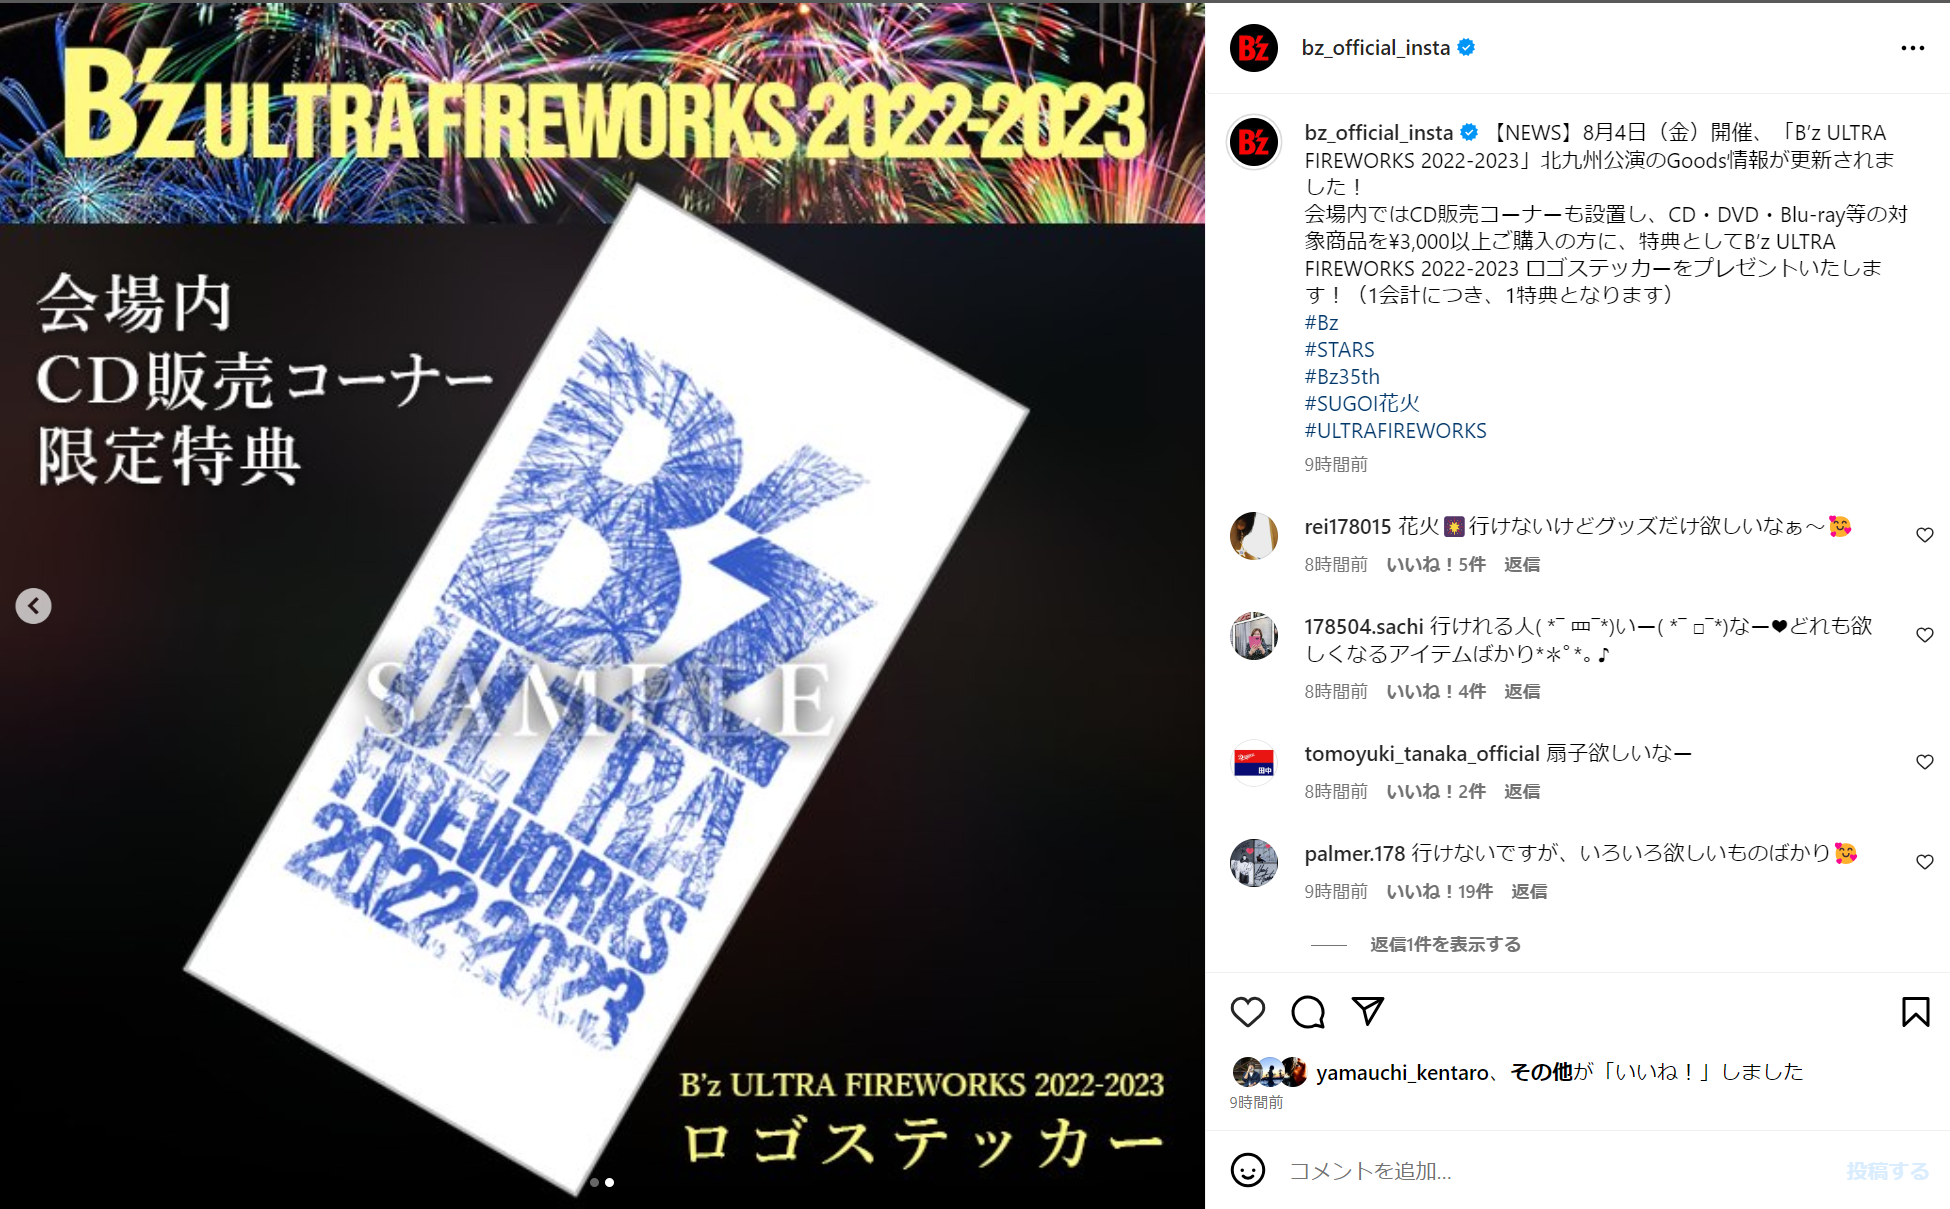 SUGOI花火『B’z ULTRA FIREWORKS 2022-2023』CD販売で対象者に配布される特典のロゴステッカーのイメージ画像